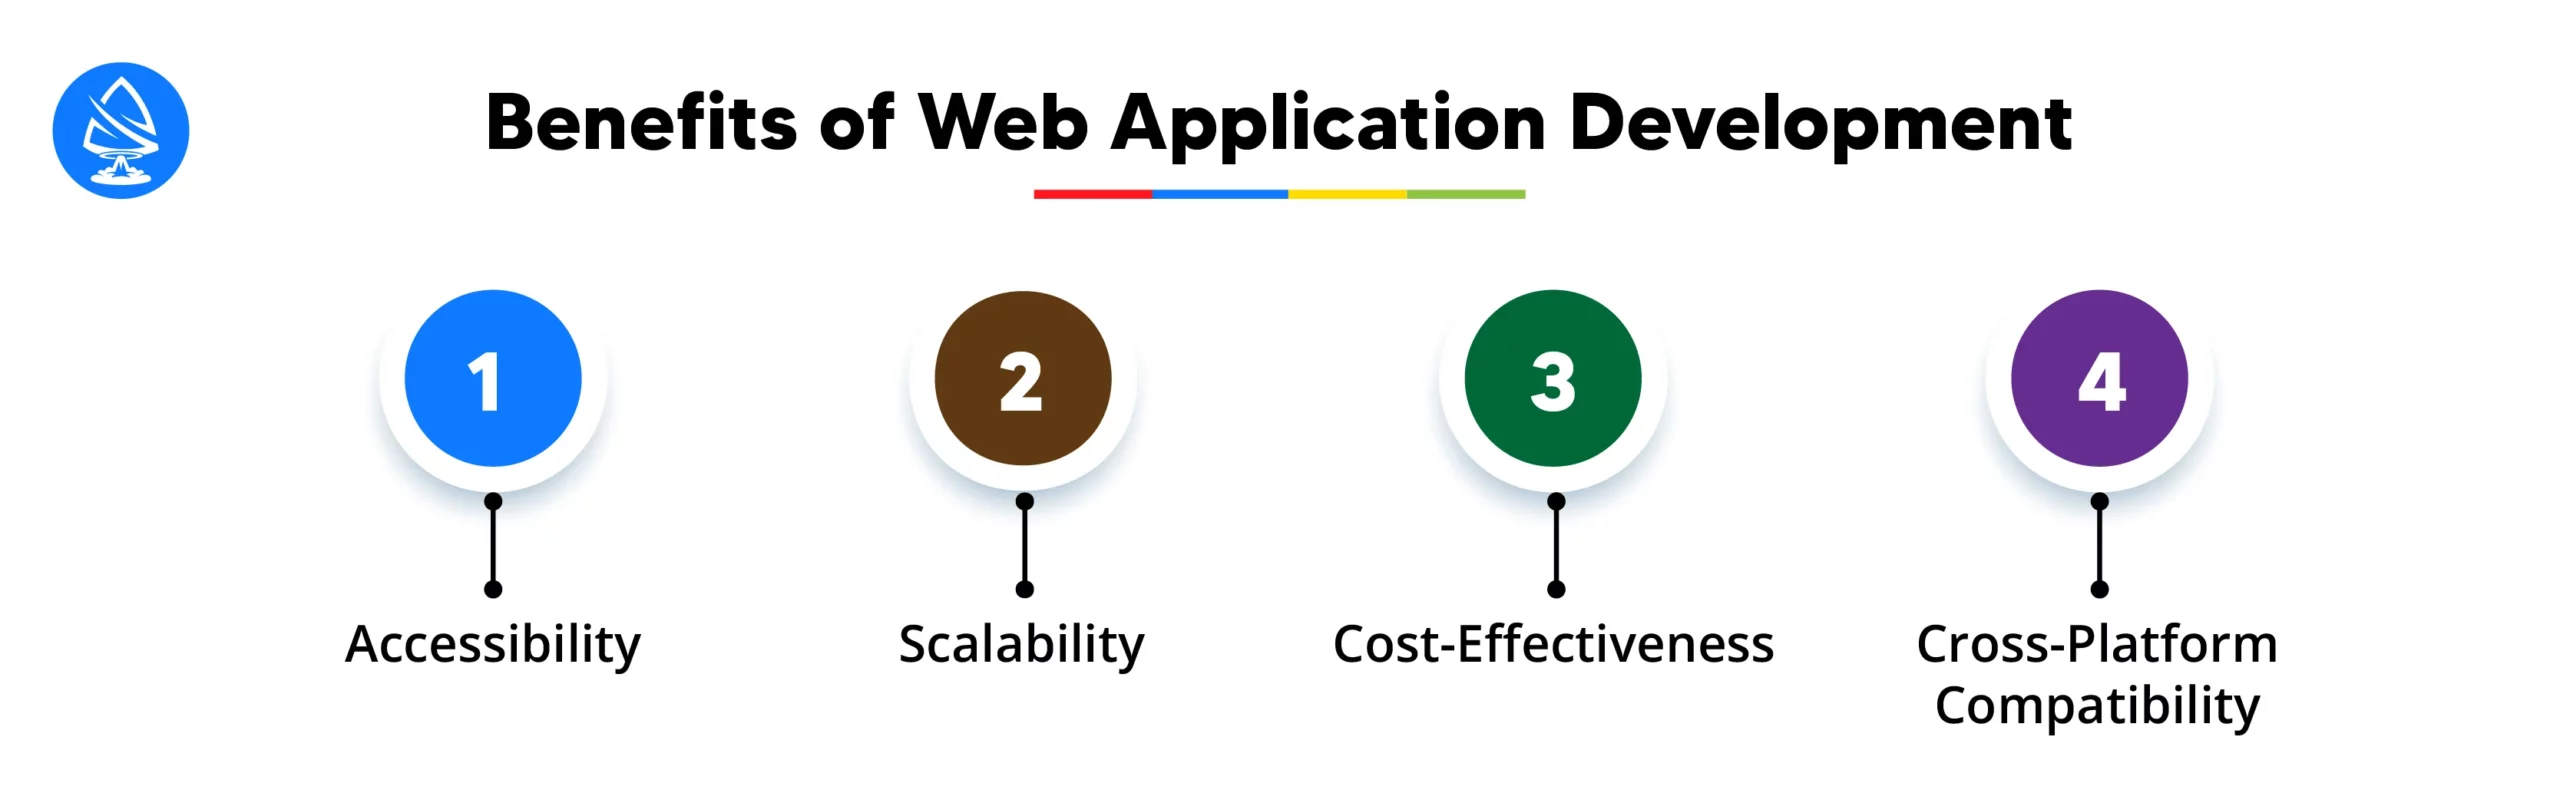 Benefits of Web Application Development